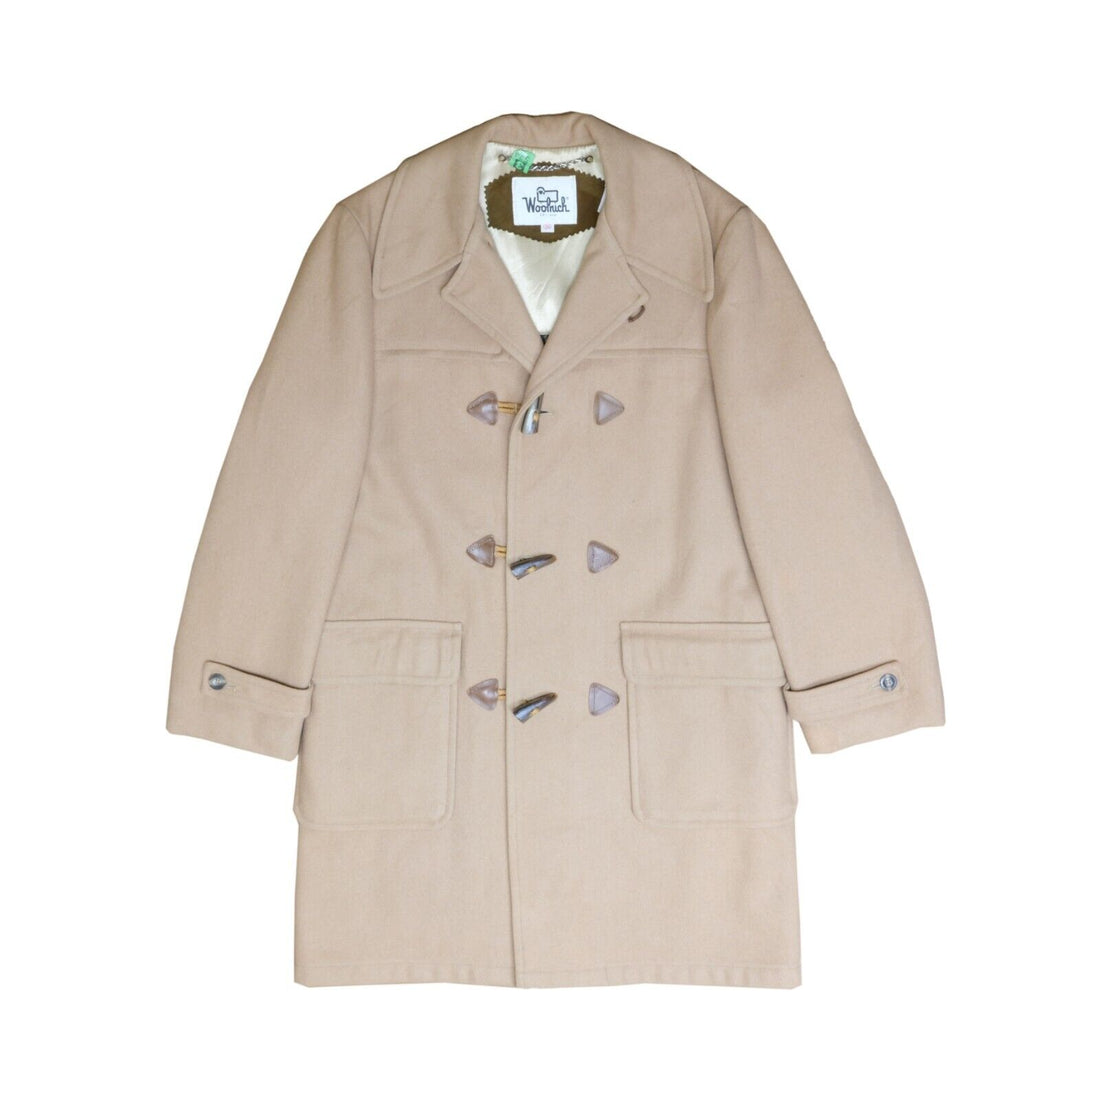 Vintage Woolrich Wool Duffle Coat Jacket Size 36 Beige Plaid Lining 80s